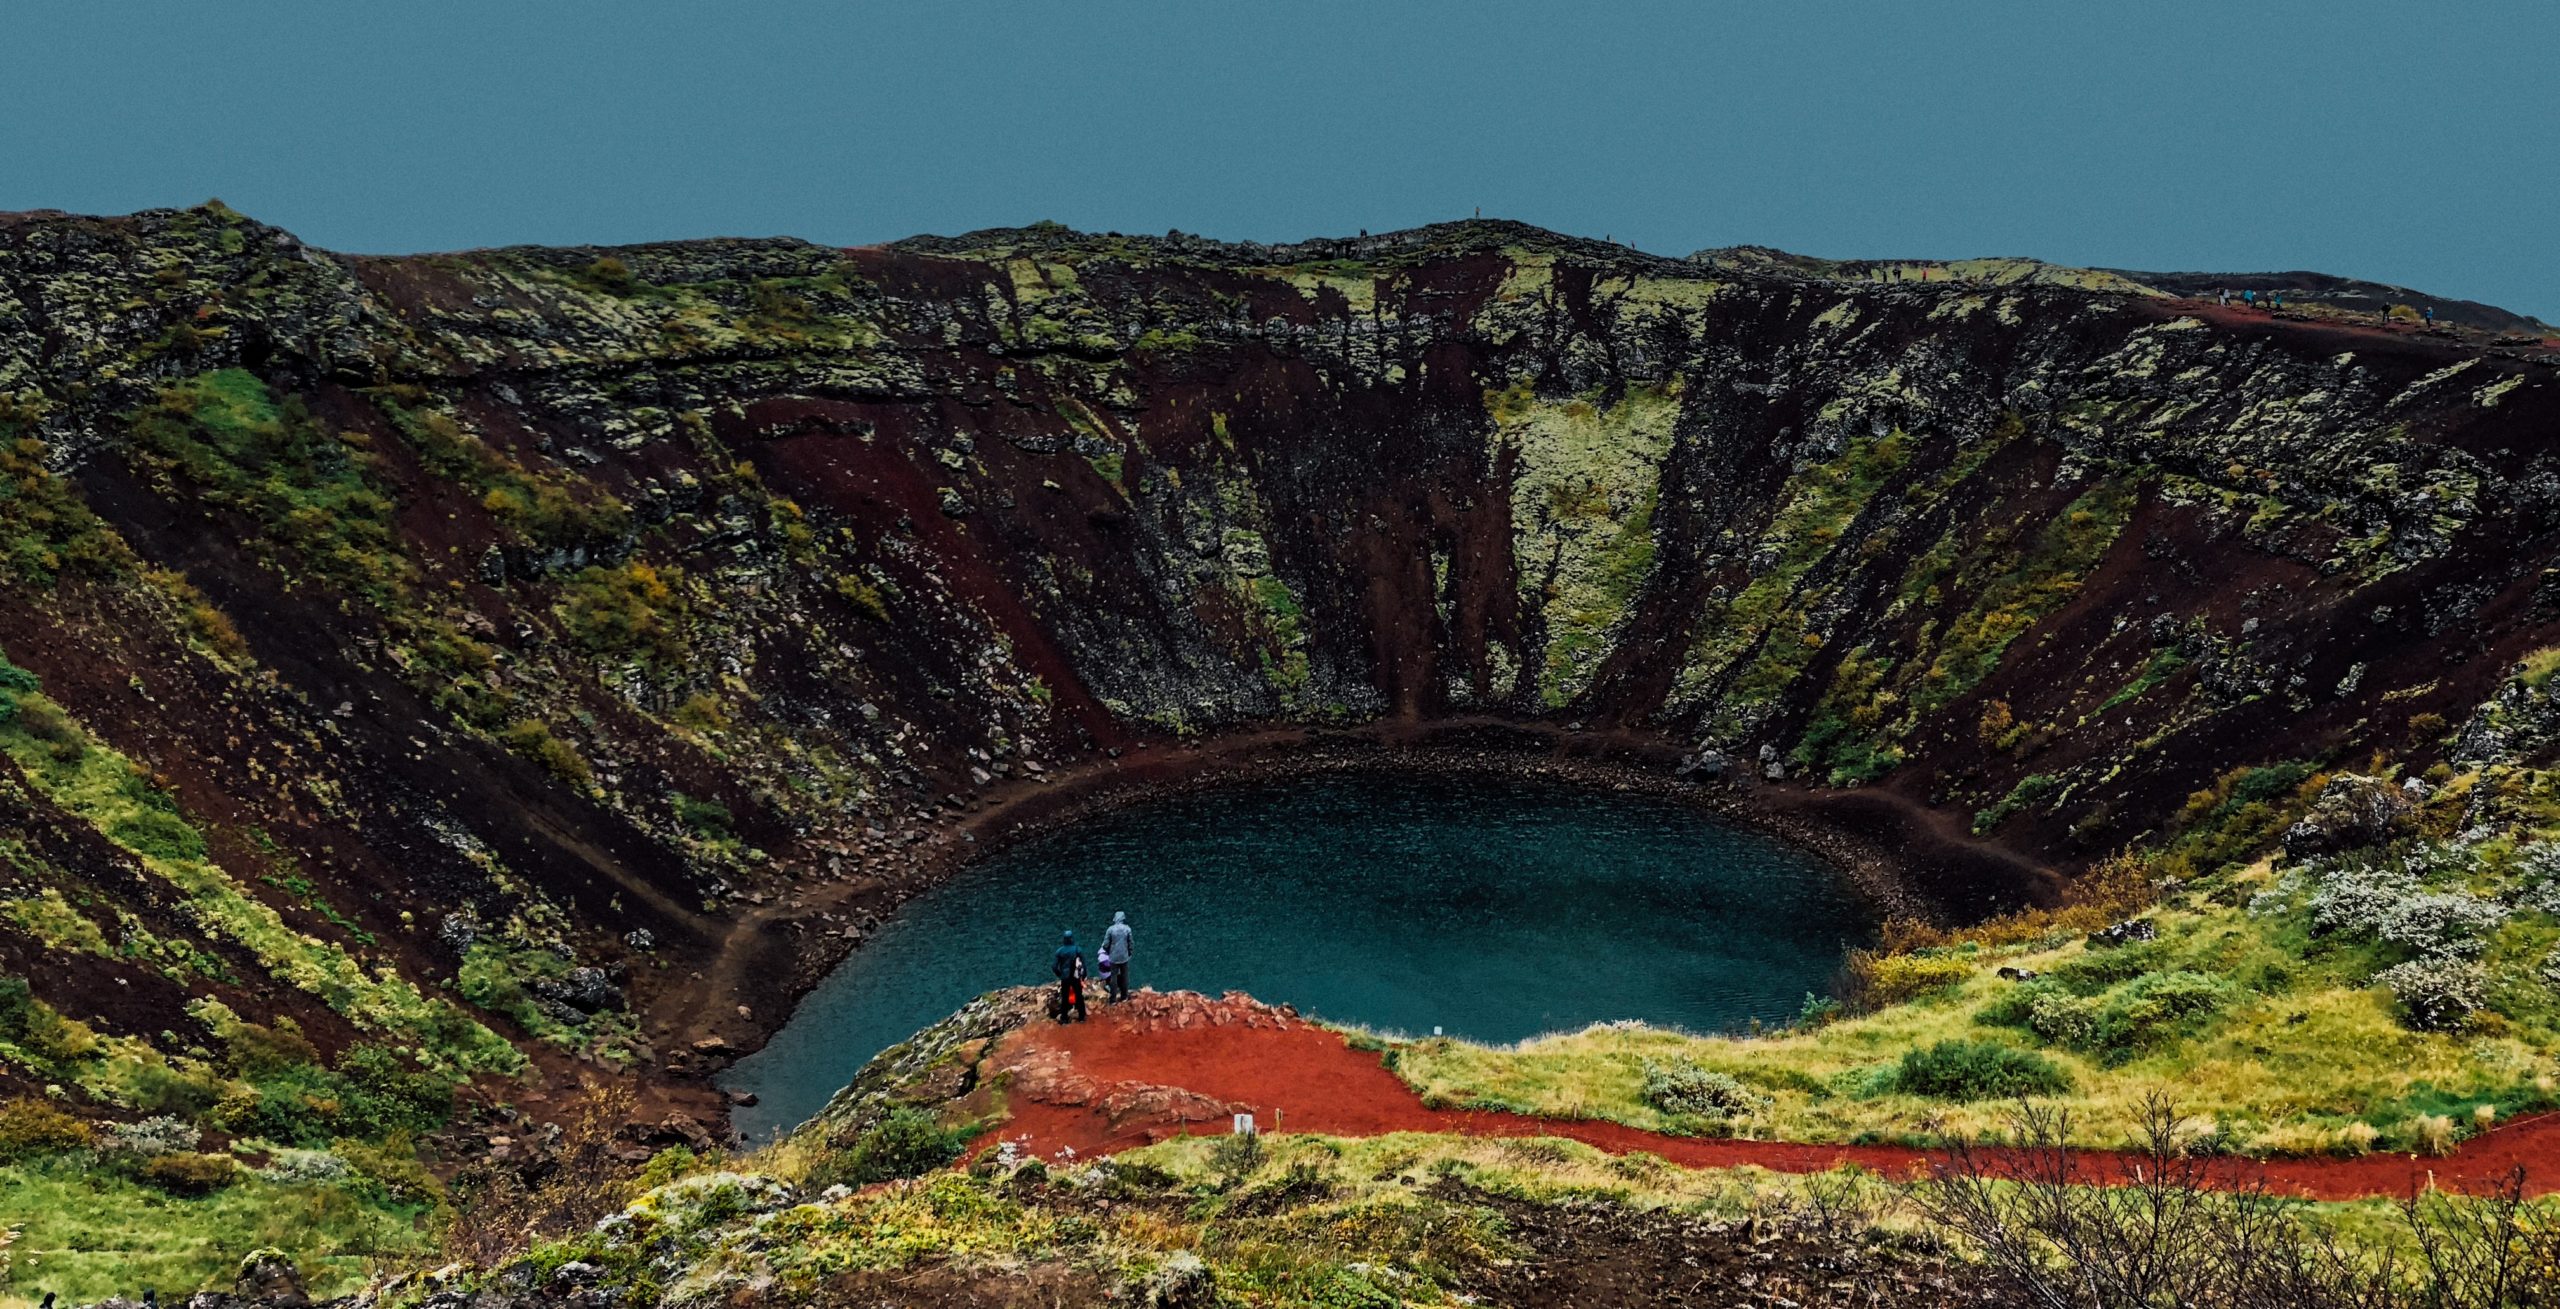 Kerid volcanic crater